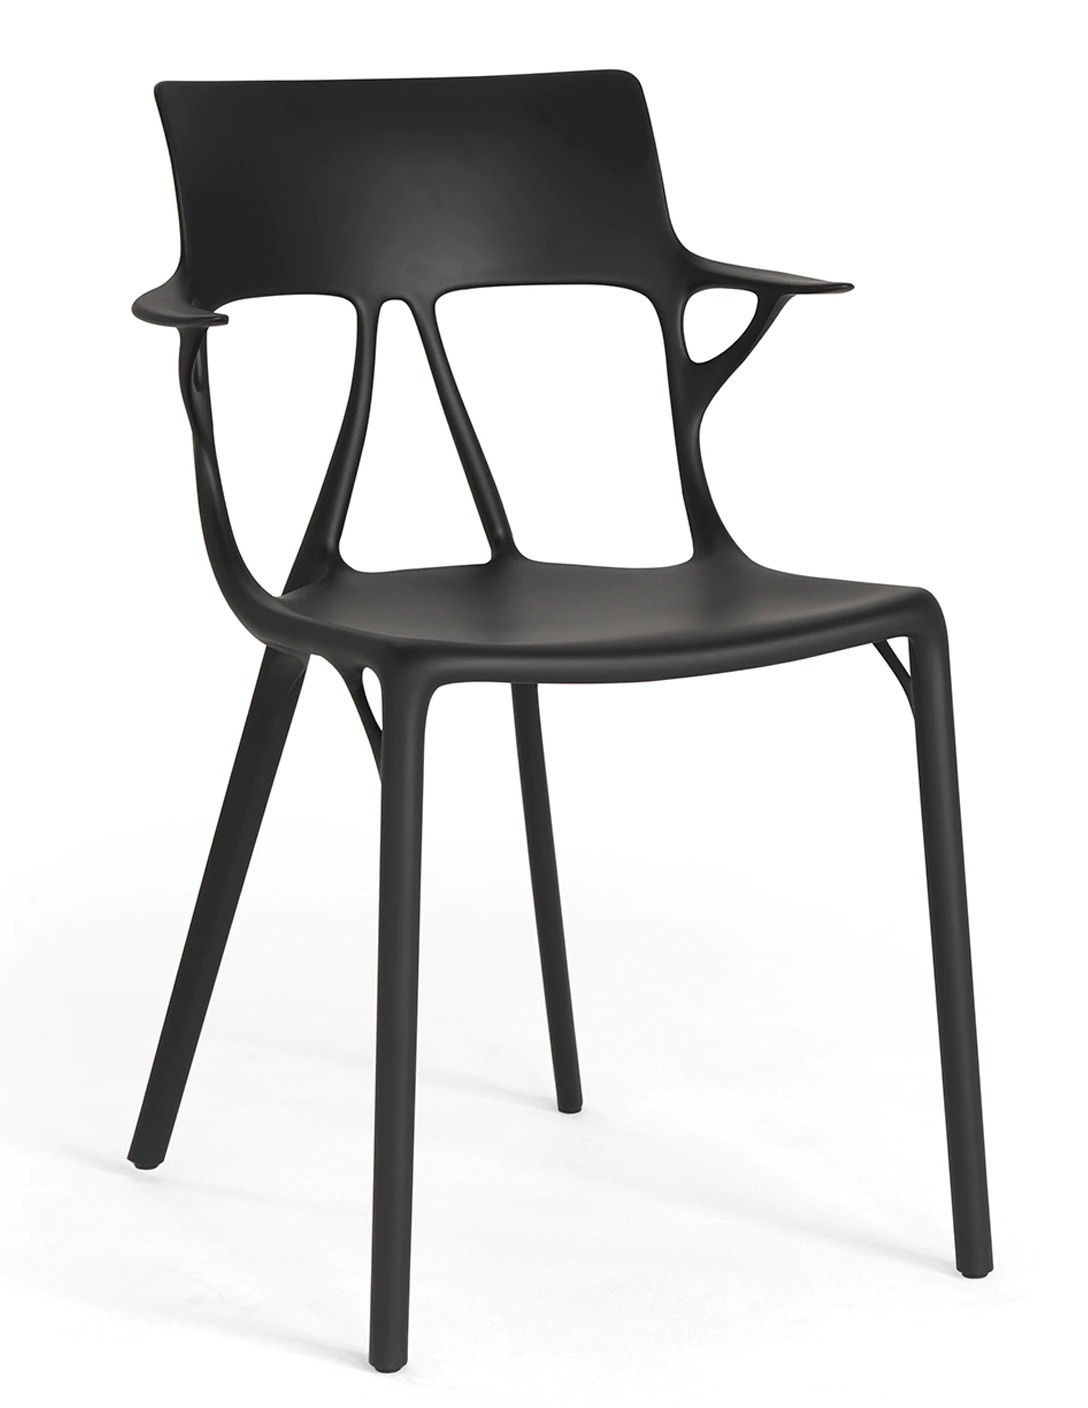 Scaun Kartell A.I. design Philippe Starck negru Kartell imagine reduss.ro 2022